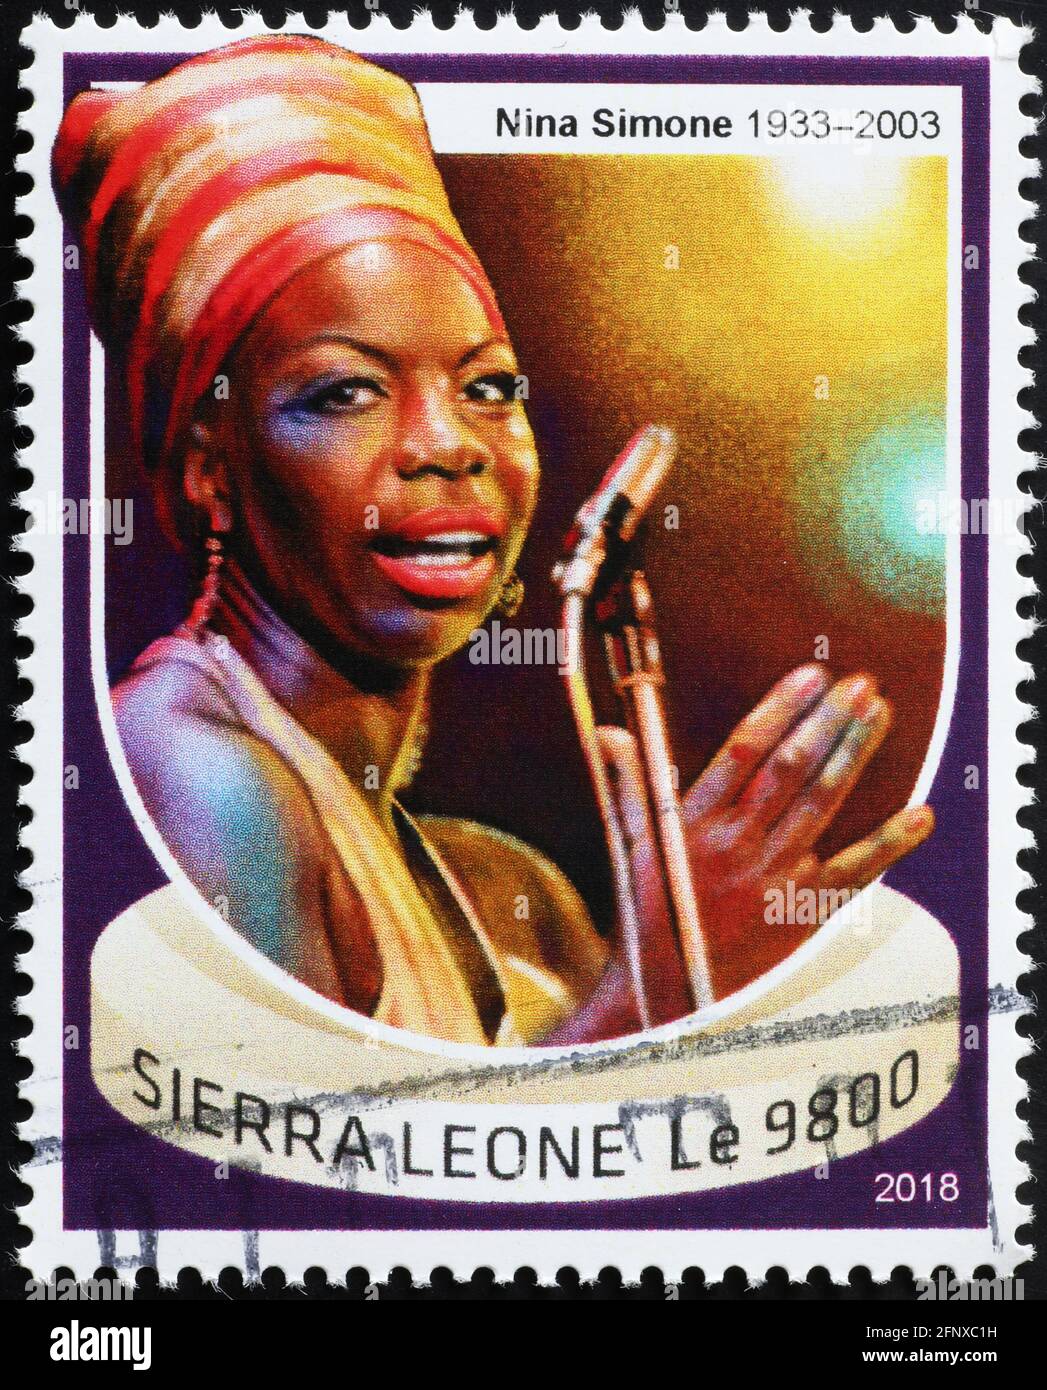 Nina Simone singing in concert on postage stamp Stock Photo